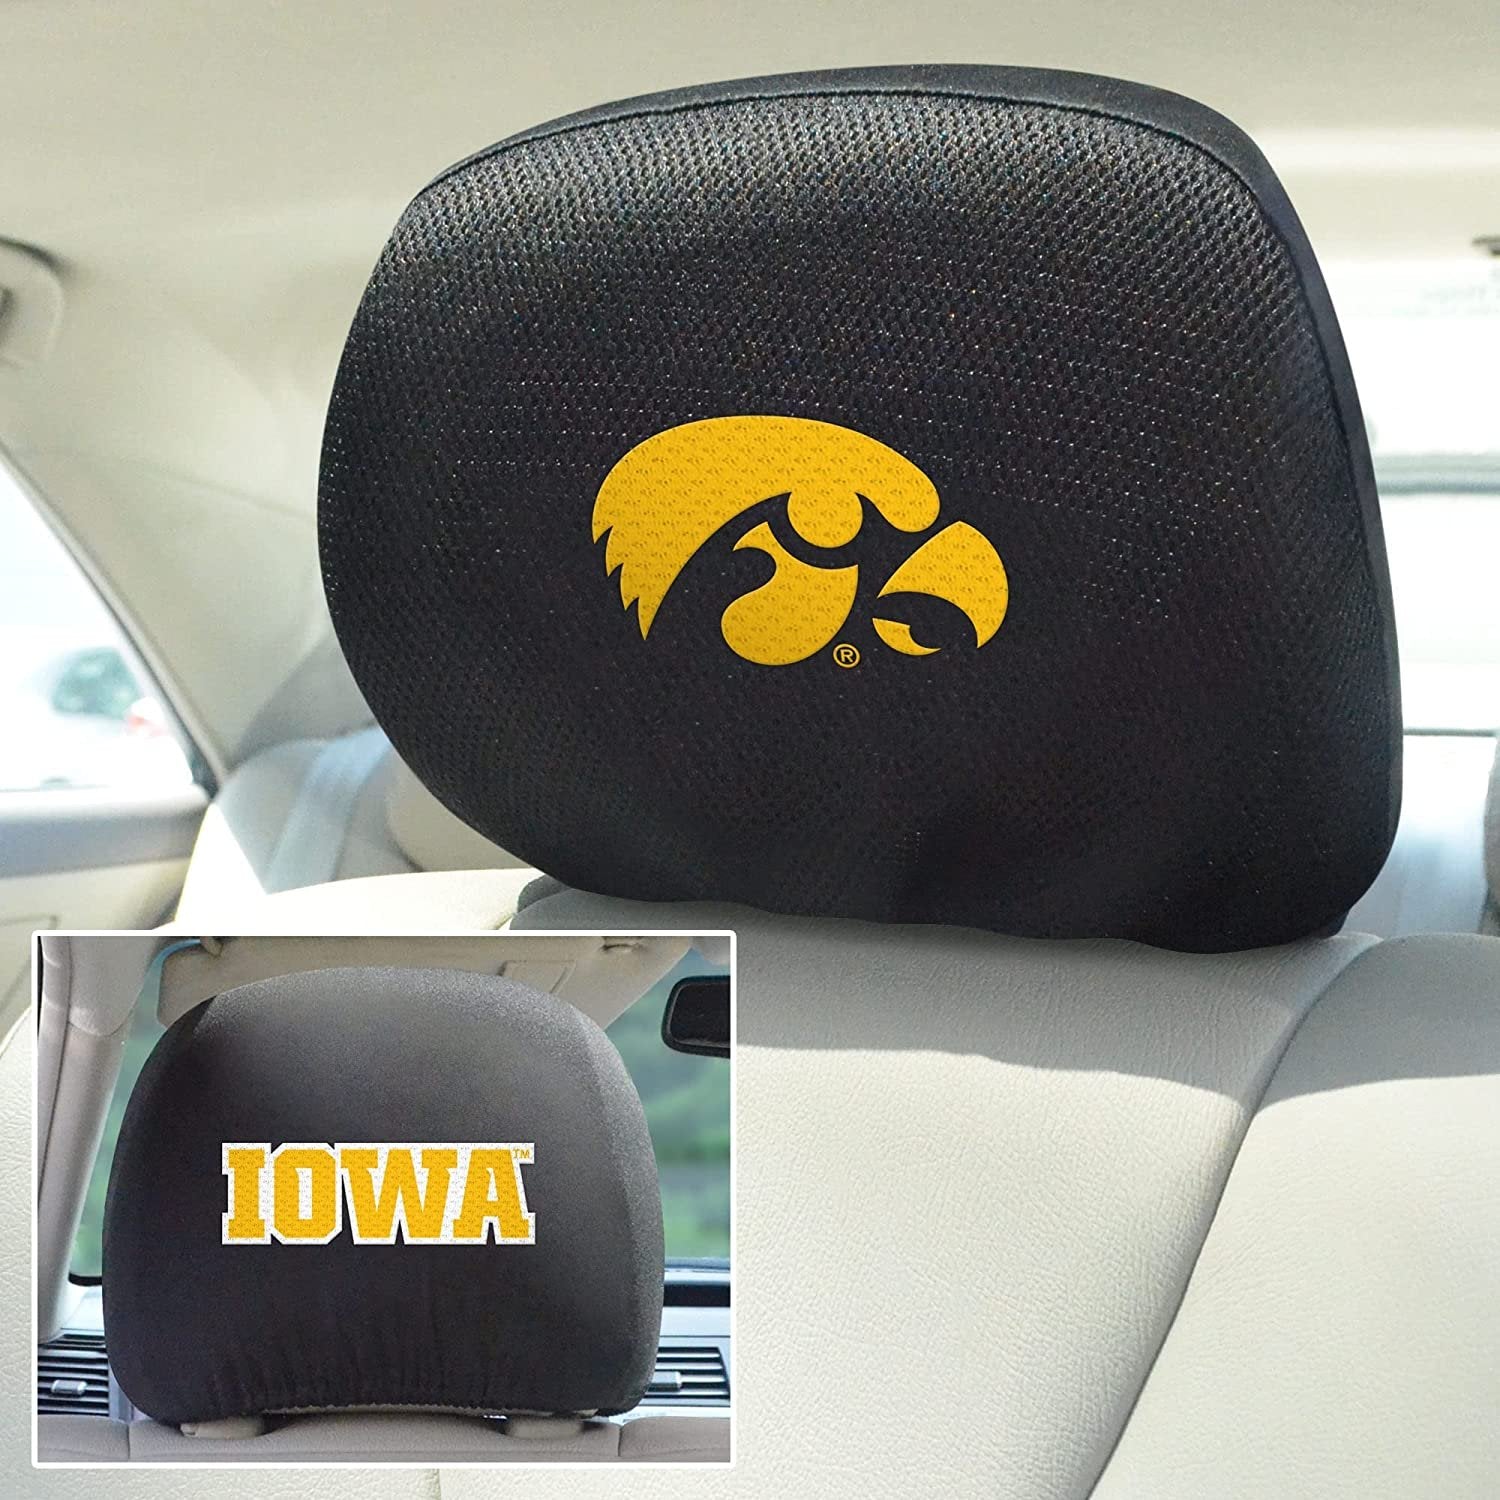 University of Iowa Hawkeyes Premium Pair of Auto Head Rest Covers, Black, Elastic, 10x14 Inch